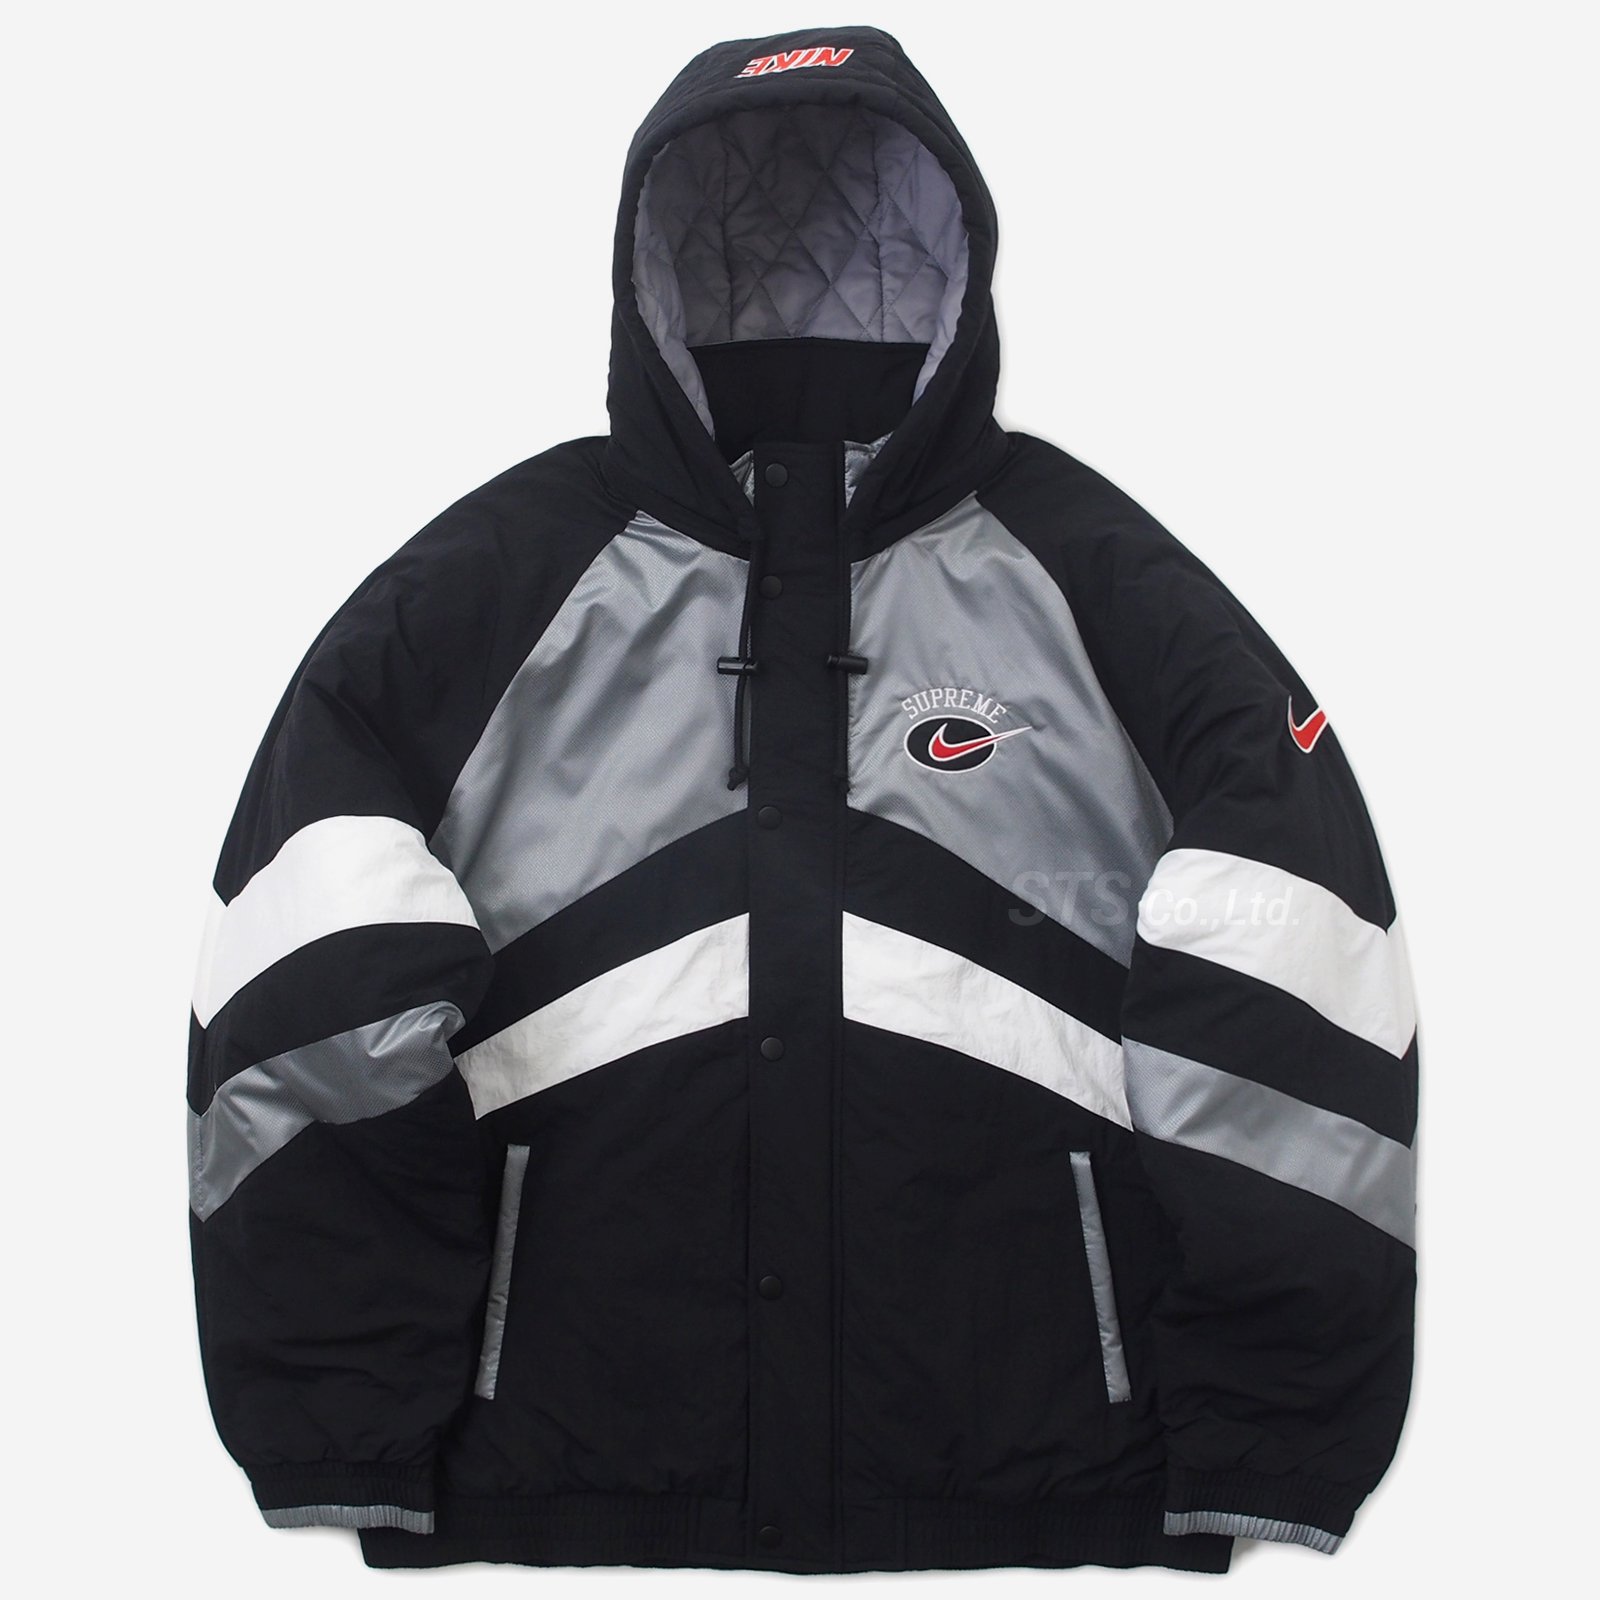 Supreme Nike hooded sport jacket ジャケット